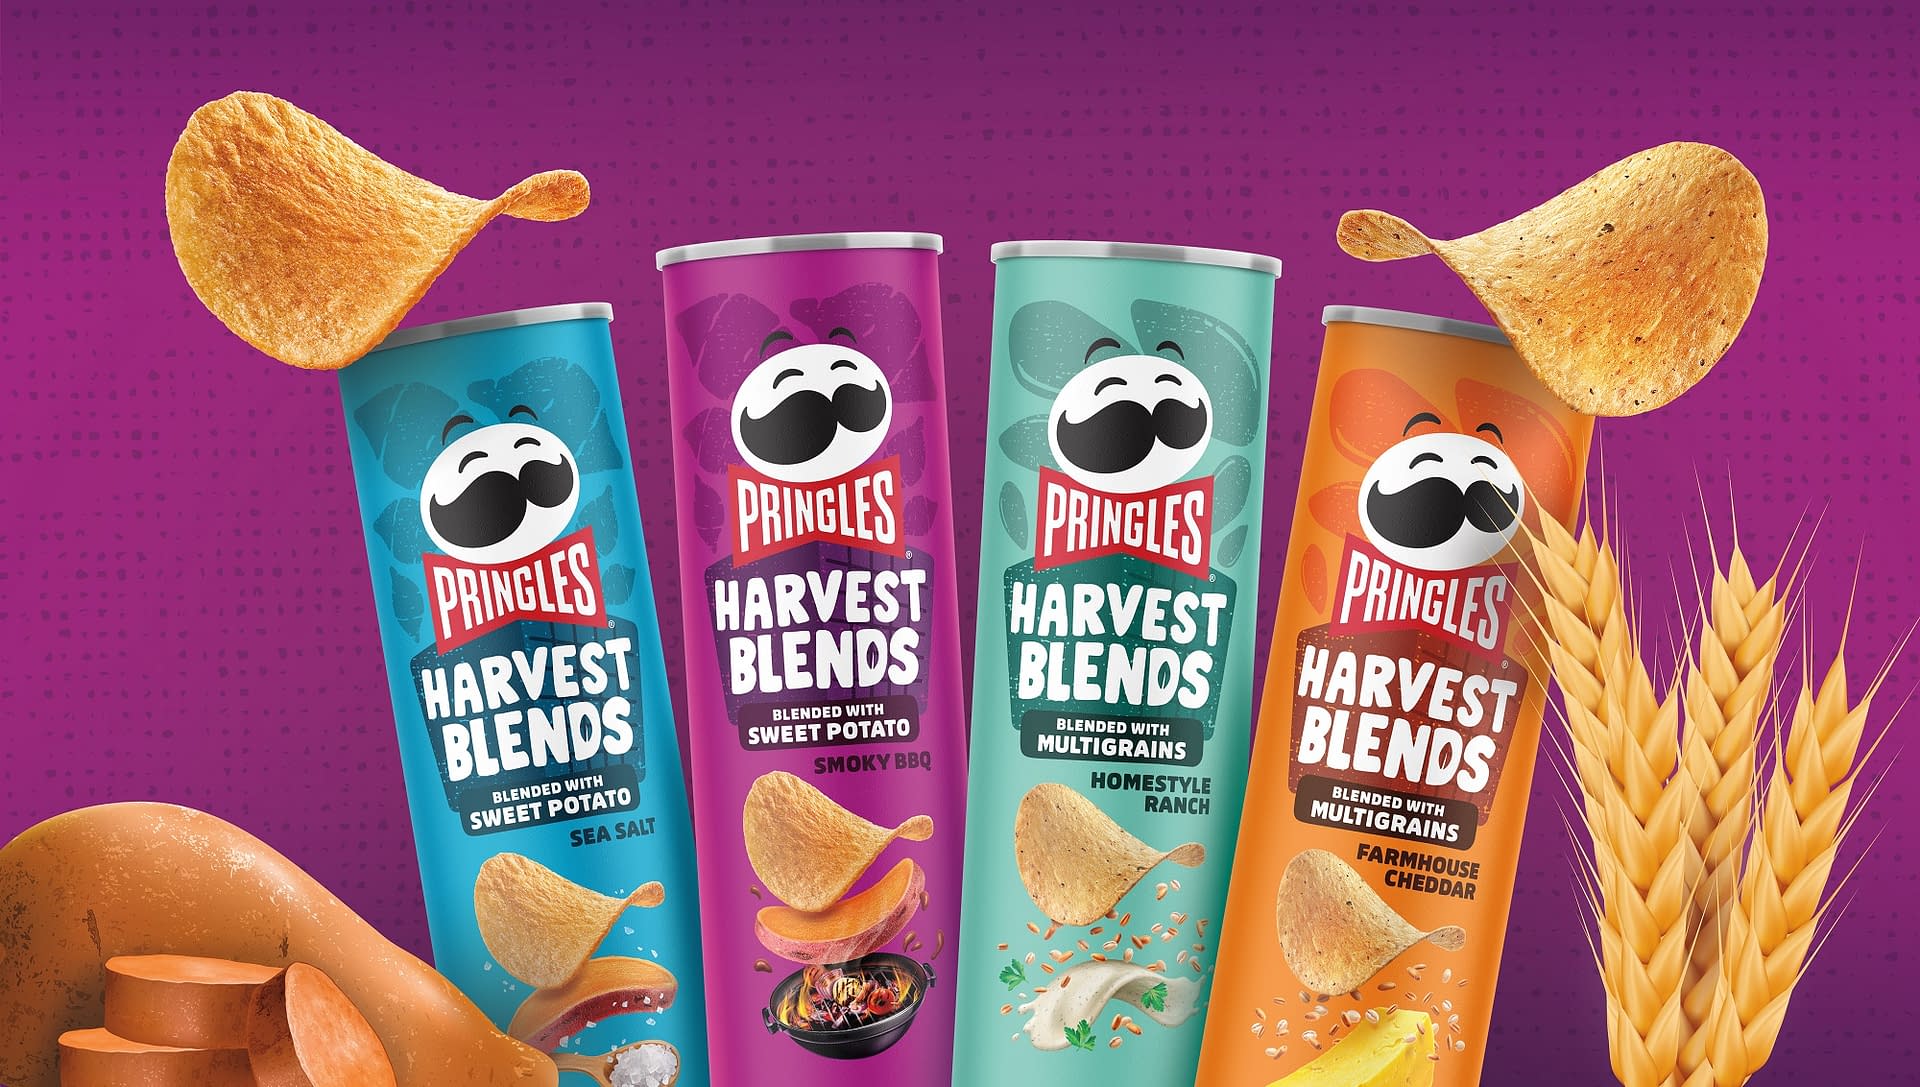 Pringles Reveals Four New Harvest Blends Collection Flavors